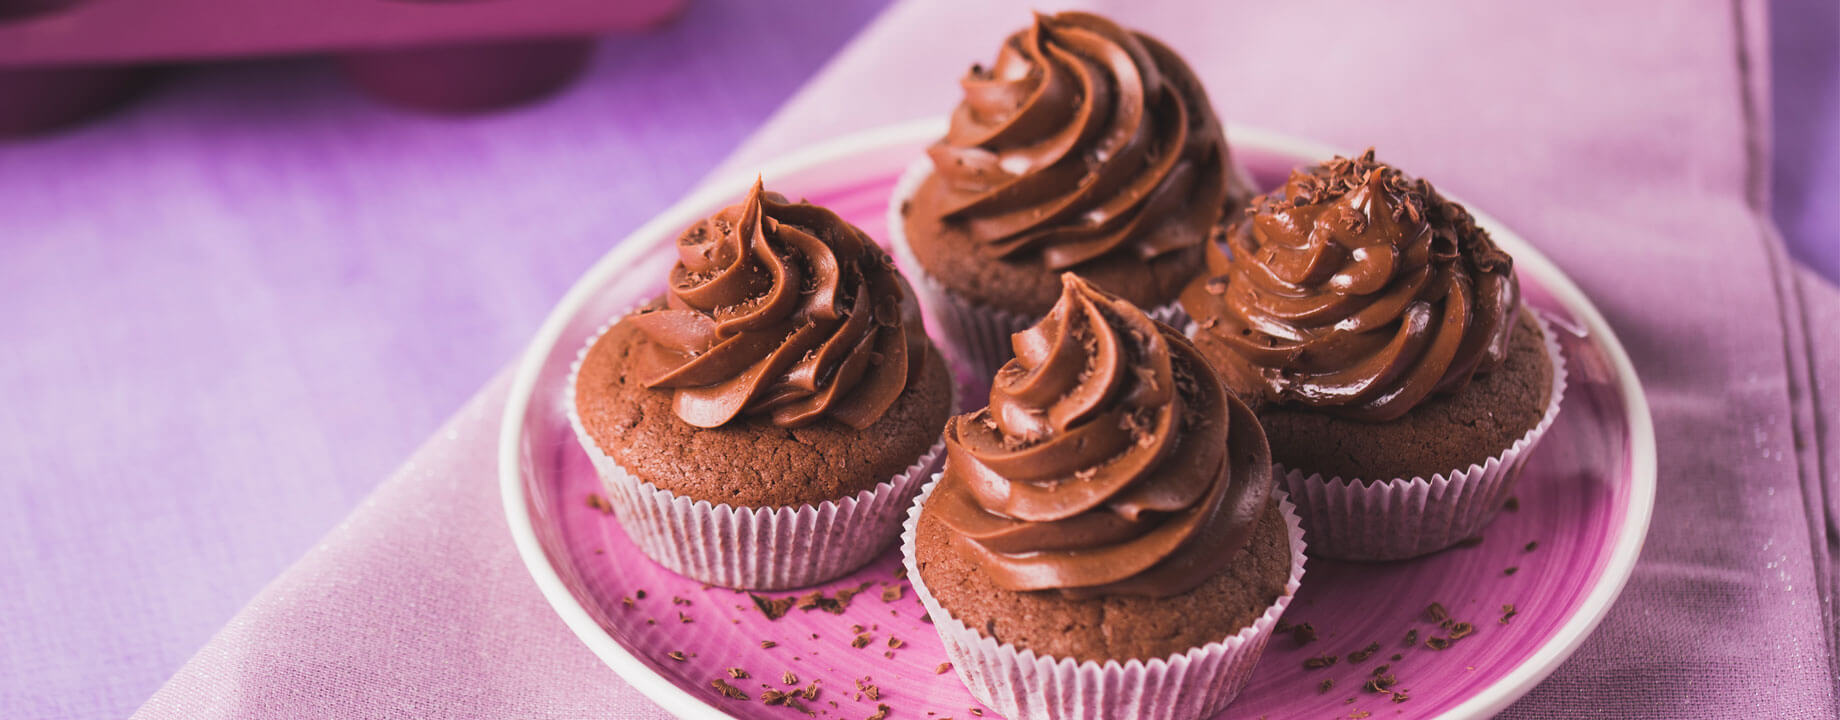 Herrlich schokoladige Cupcakes | Tupperware